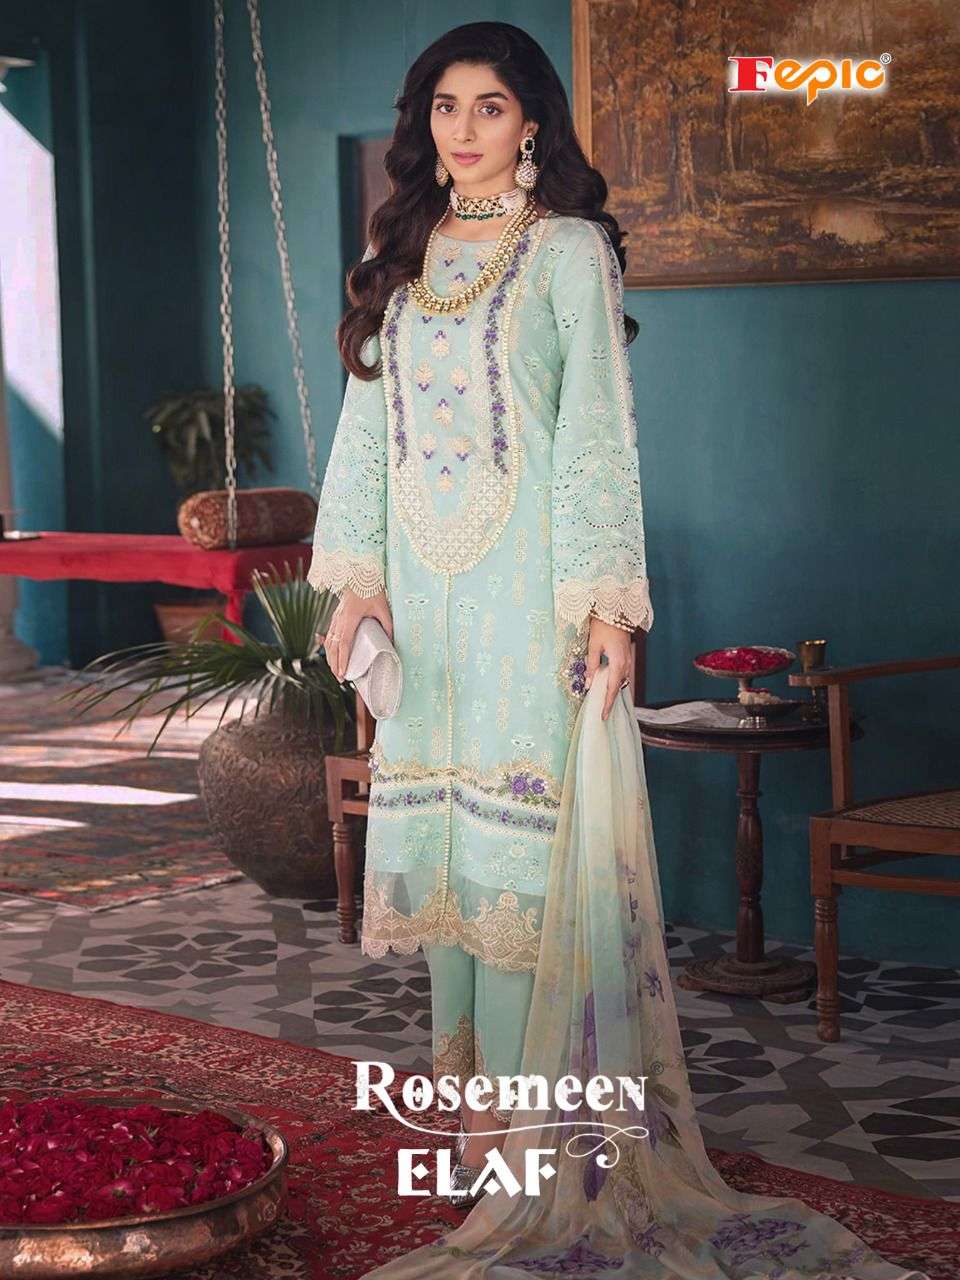 fepic rosemeen by elaf series 46016 - 46020 cotton designer pakistani collection online seller surat 